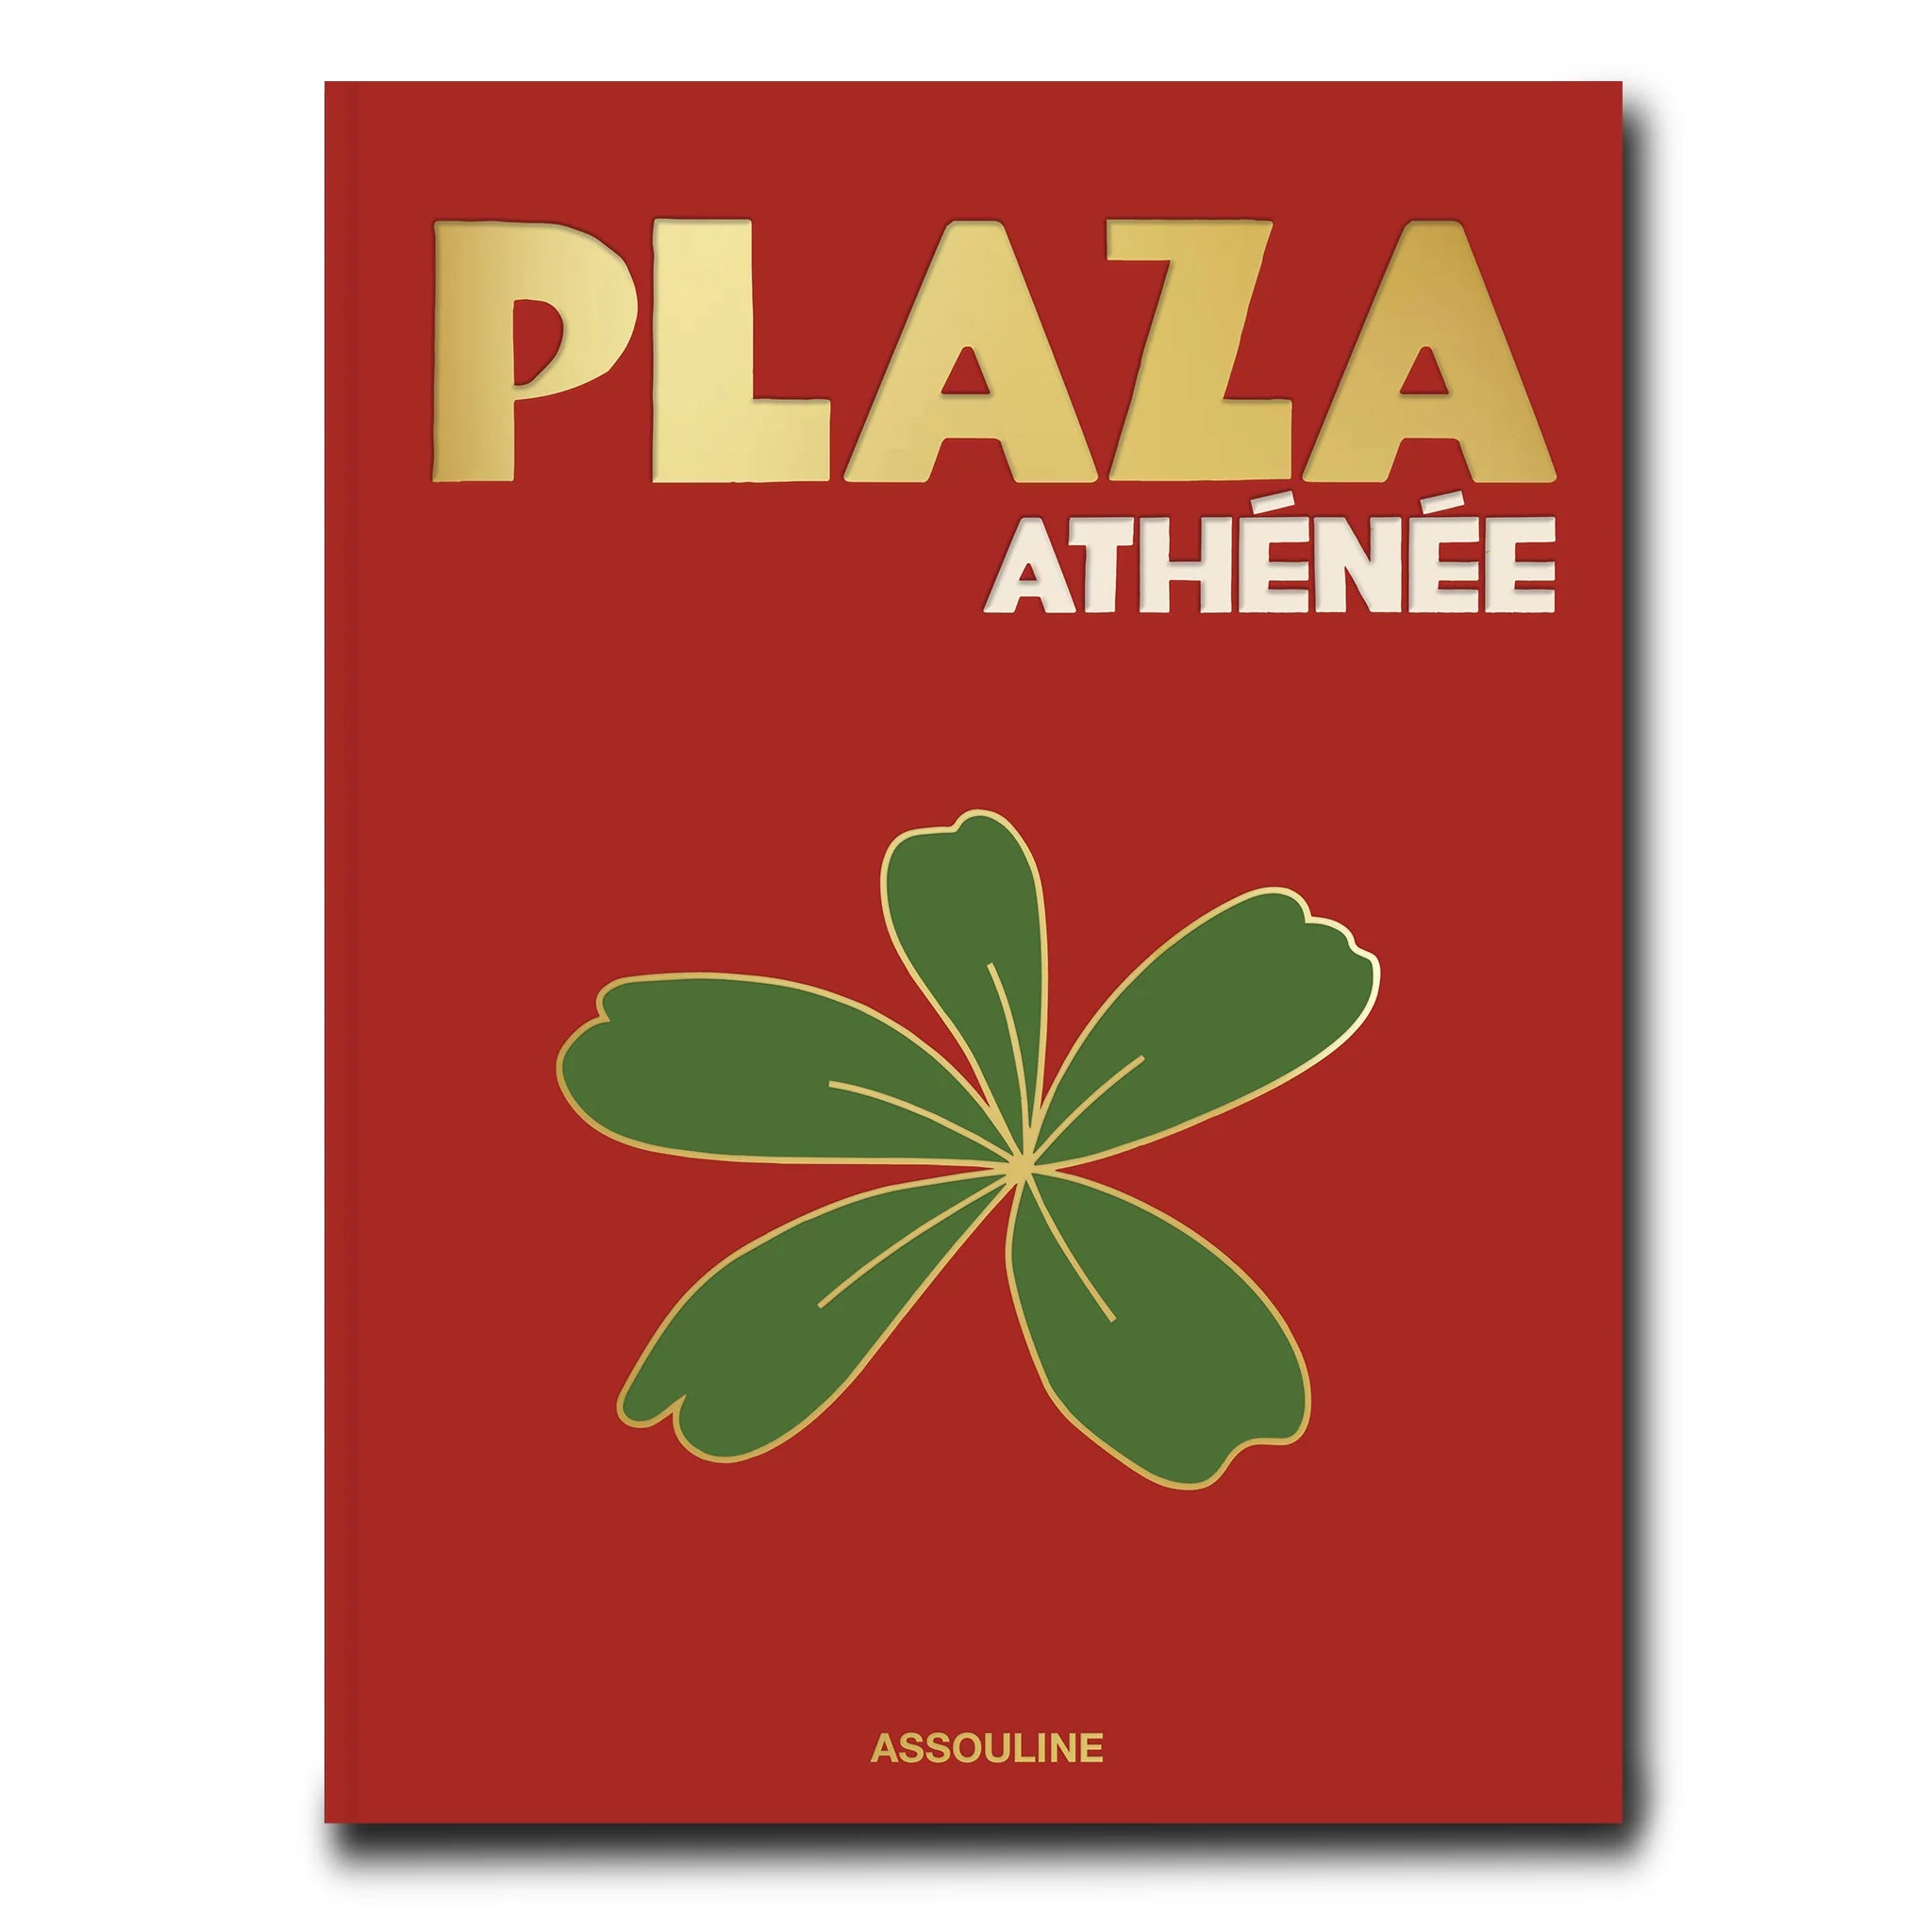 PLAZA ATHENEE